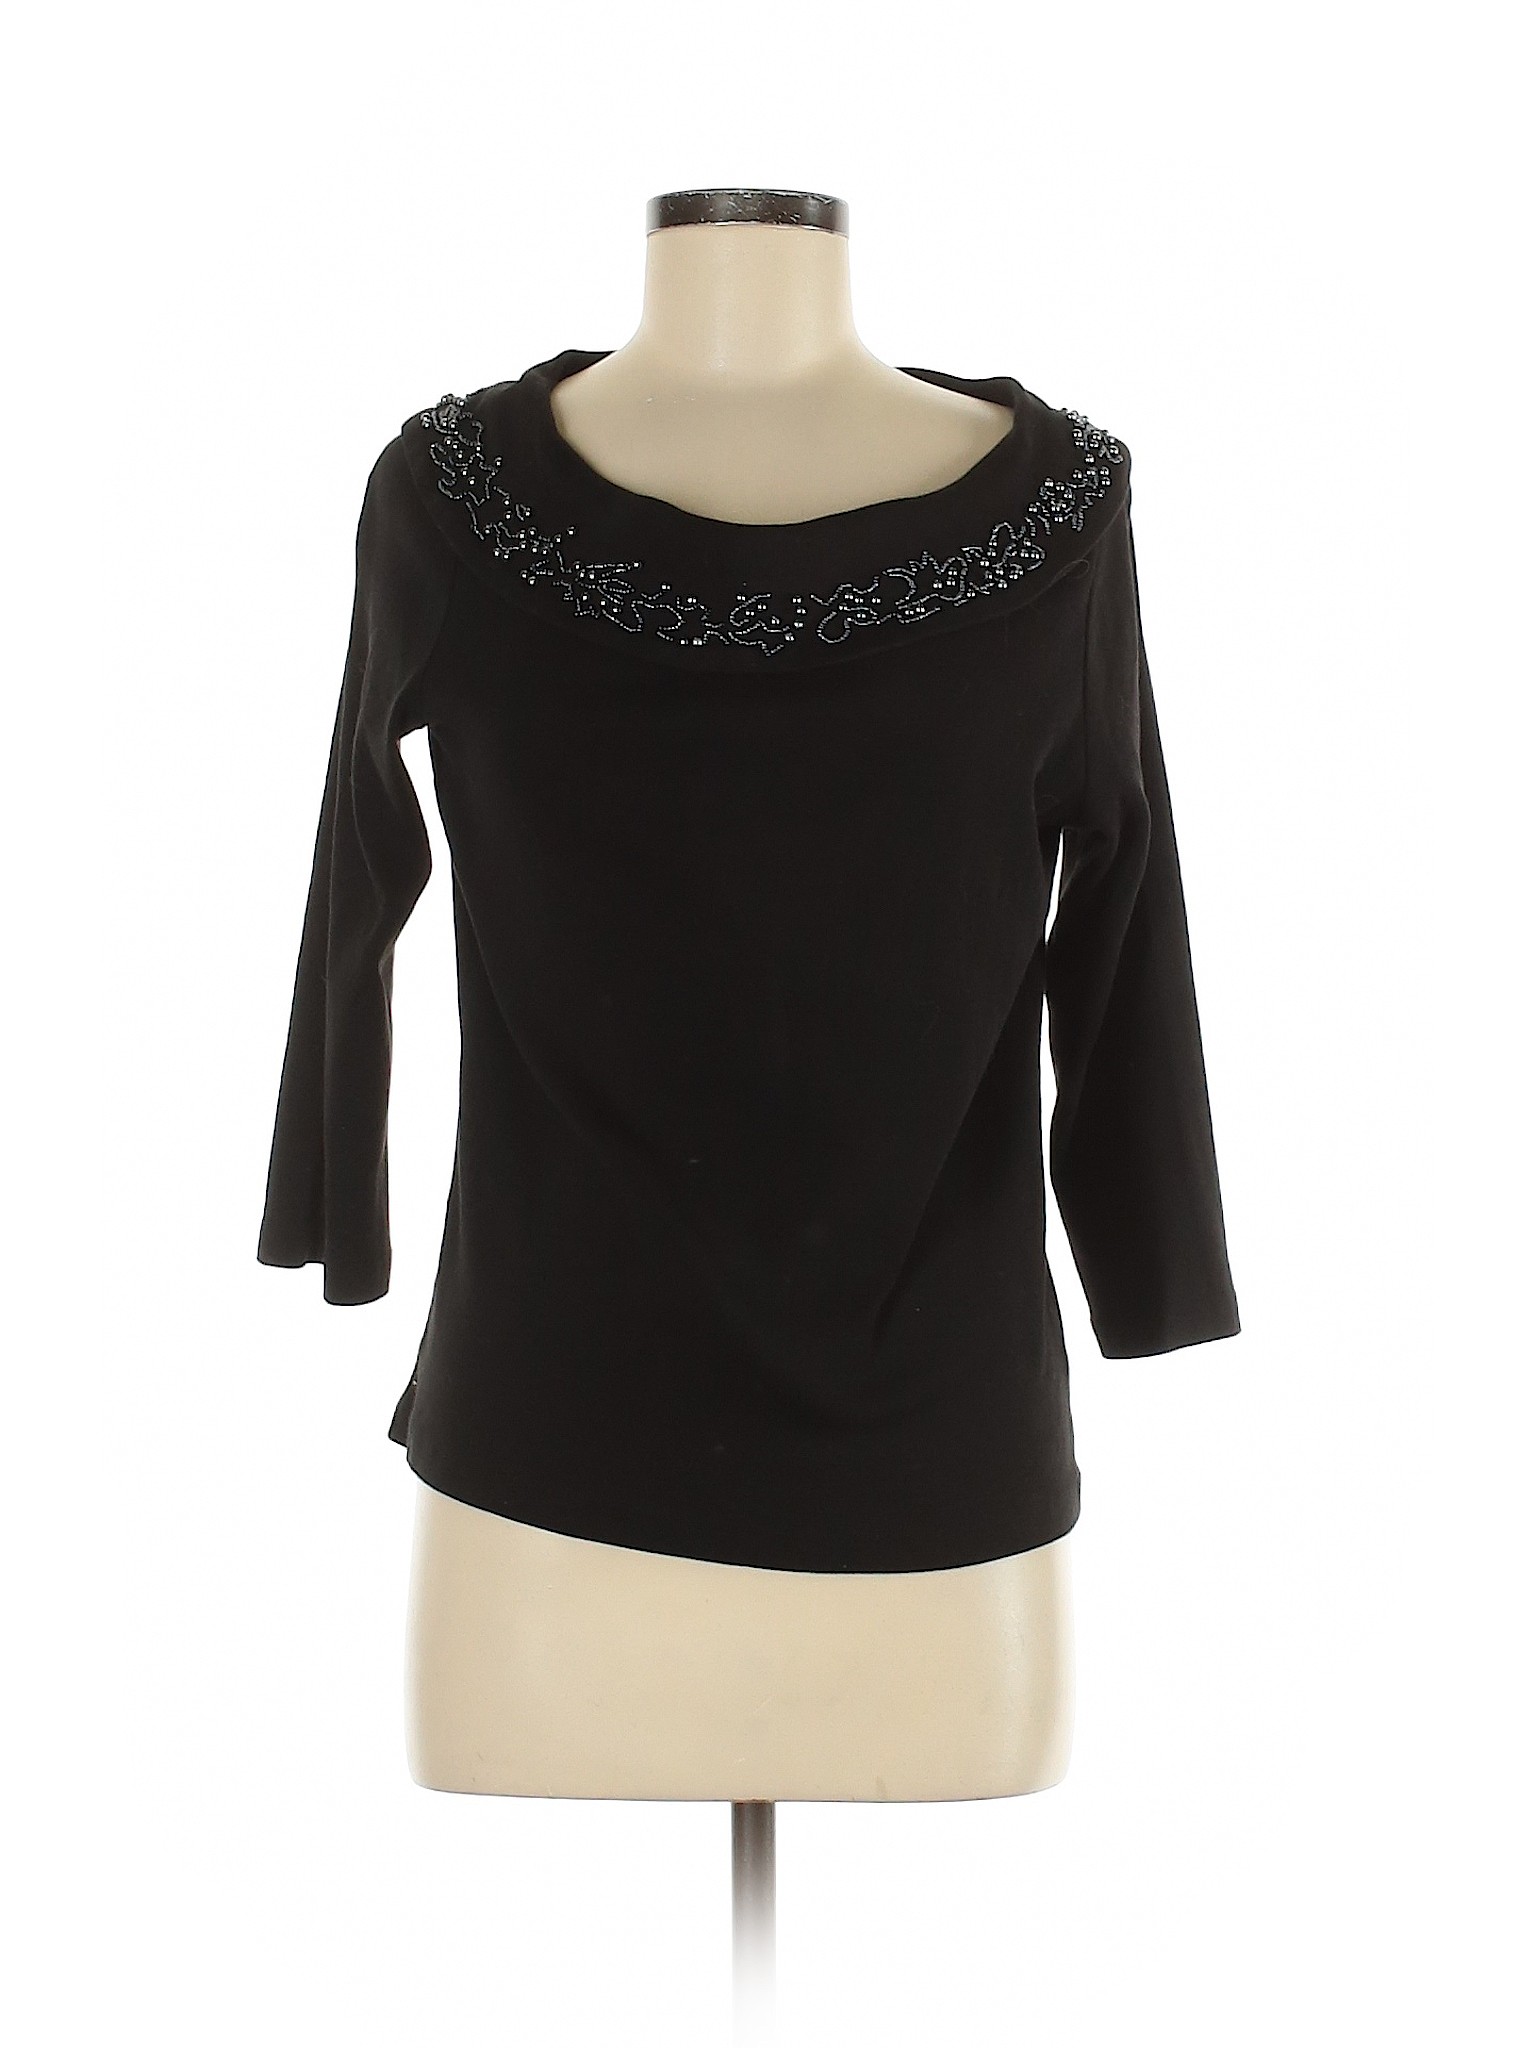 Rafaella Women Black 3/4 Sleeve Top M | eBay